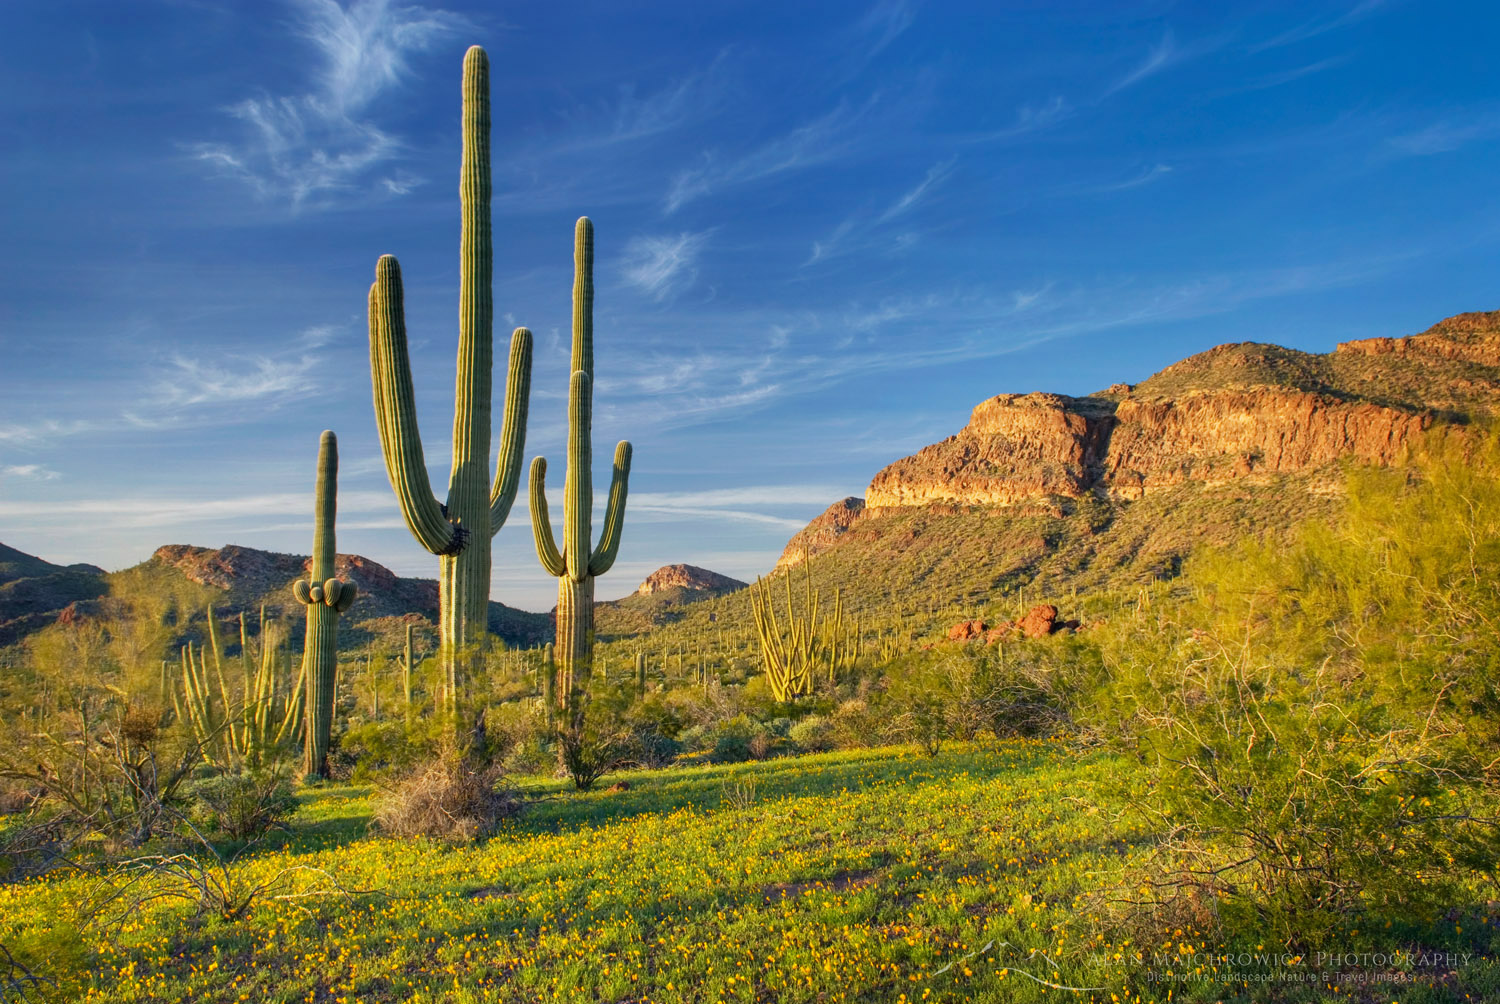 Saguaro Cactus (Carnegiea gigantea) standing amidst fields of yellow Mexican Poppies, Organ Pipe Cactus National Monument Arizona #35349